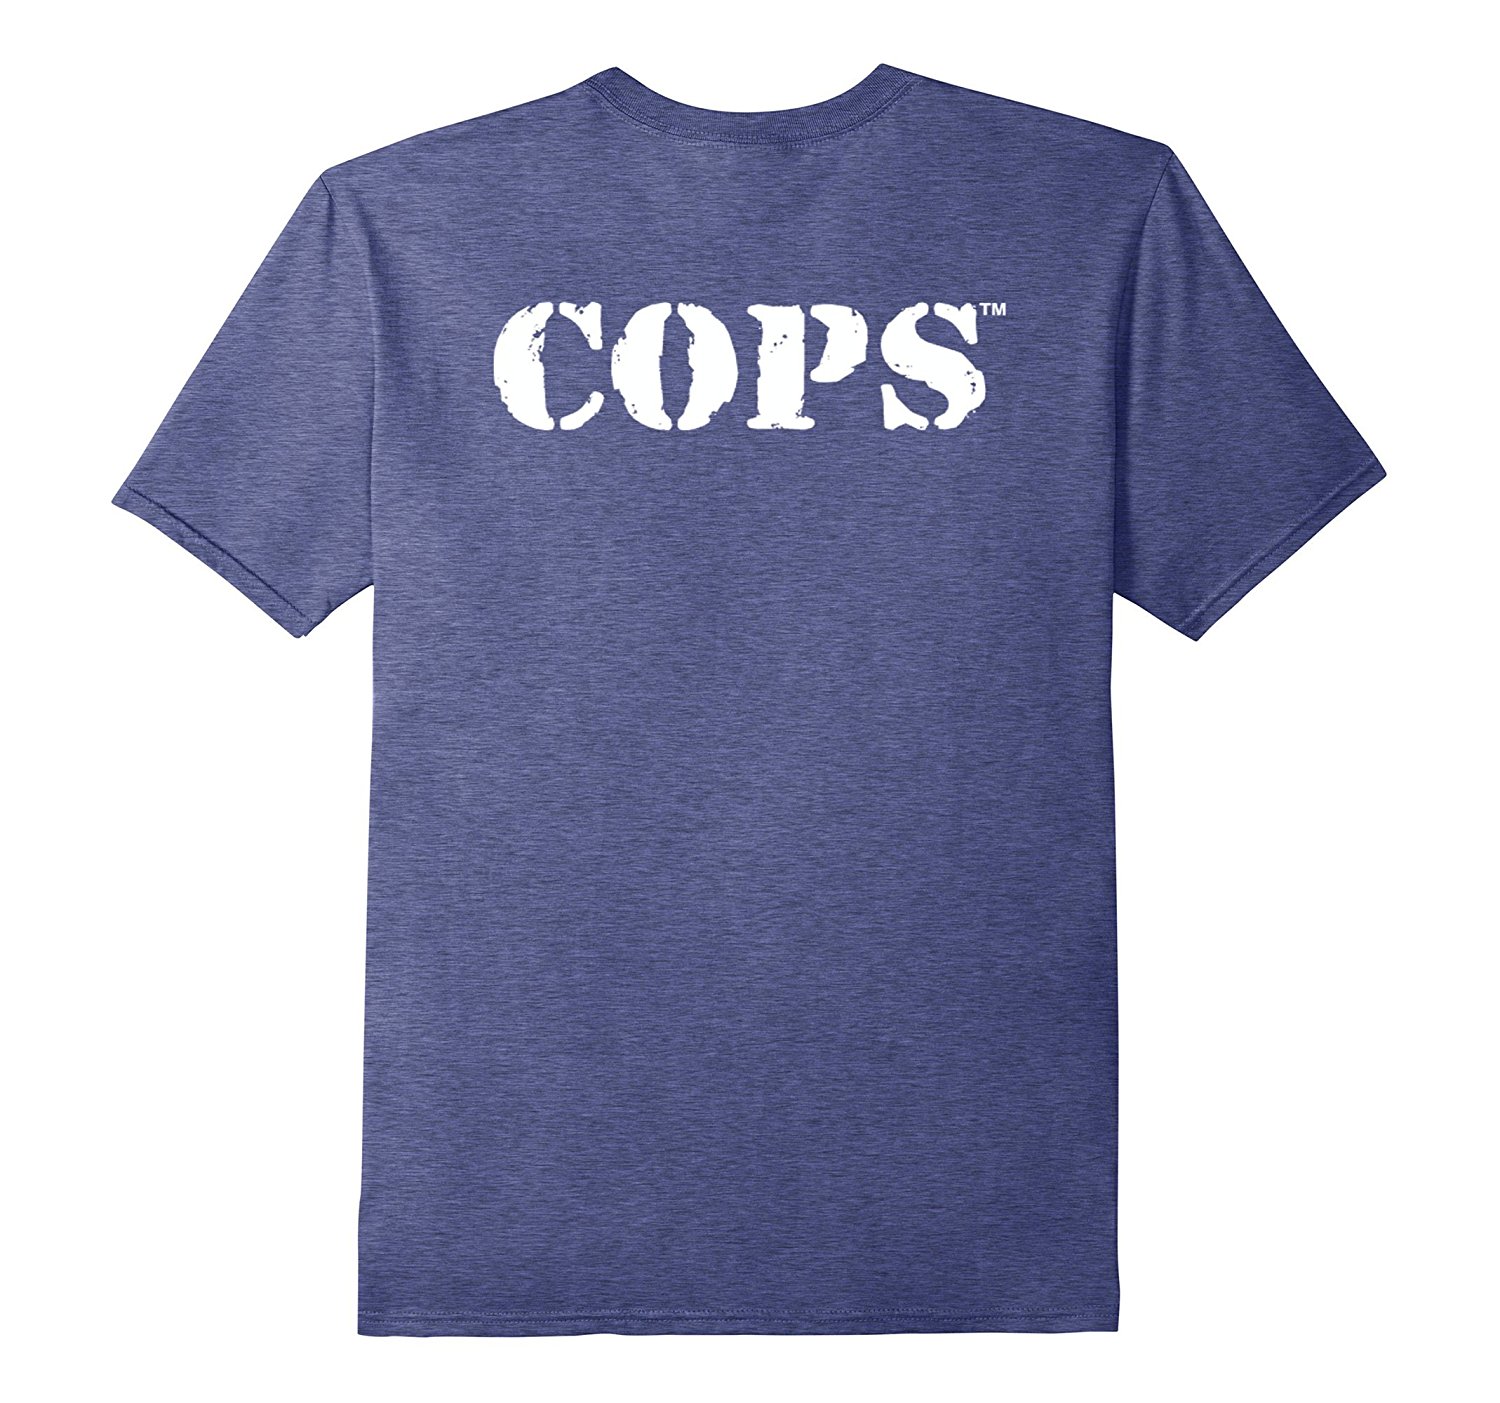 Amazon.com: COPS T-Shirt: Clothing